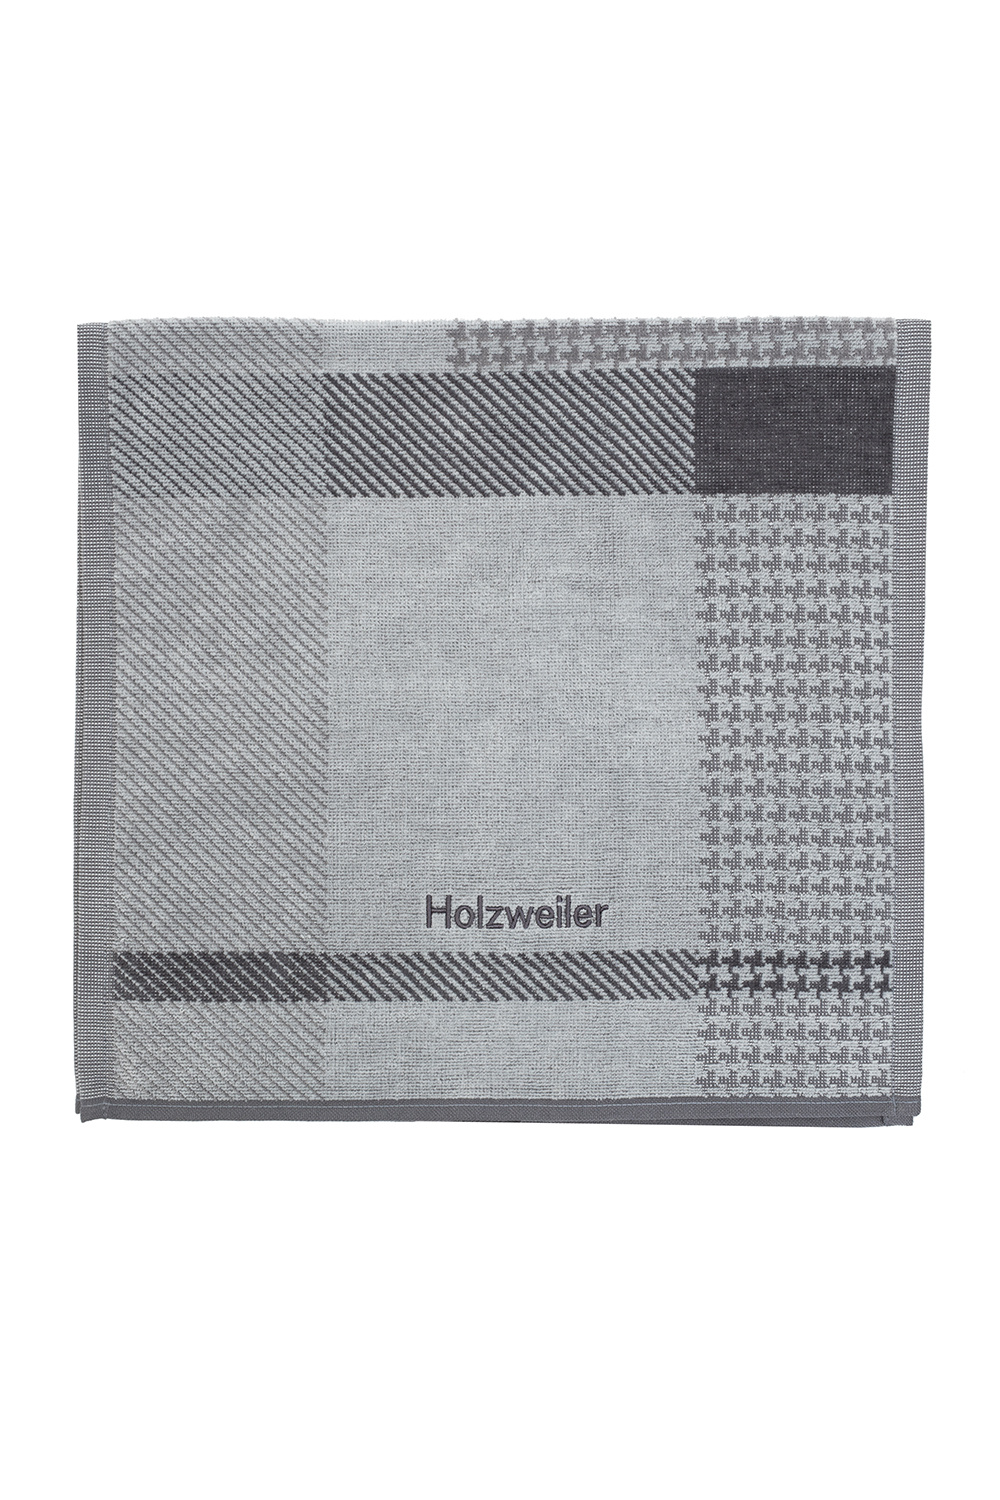 Holzweiler Towel with logo